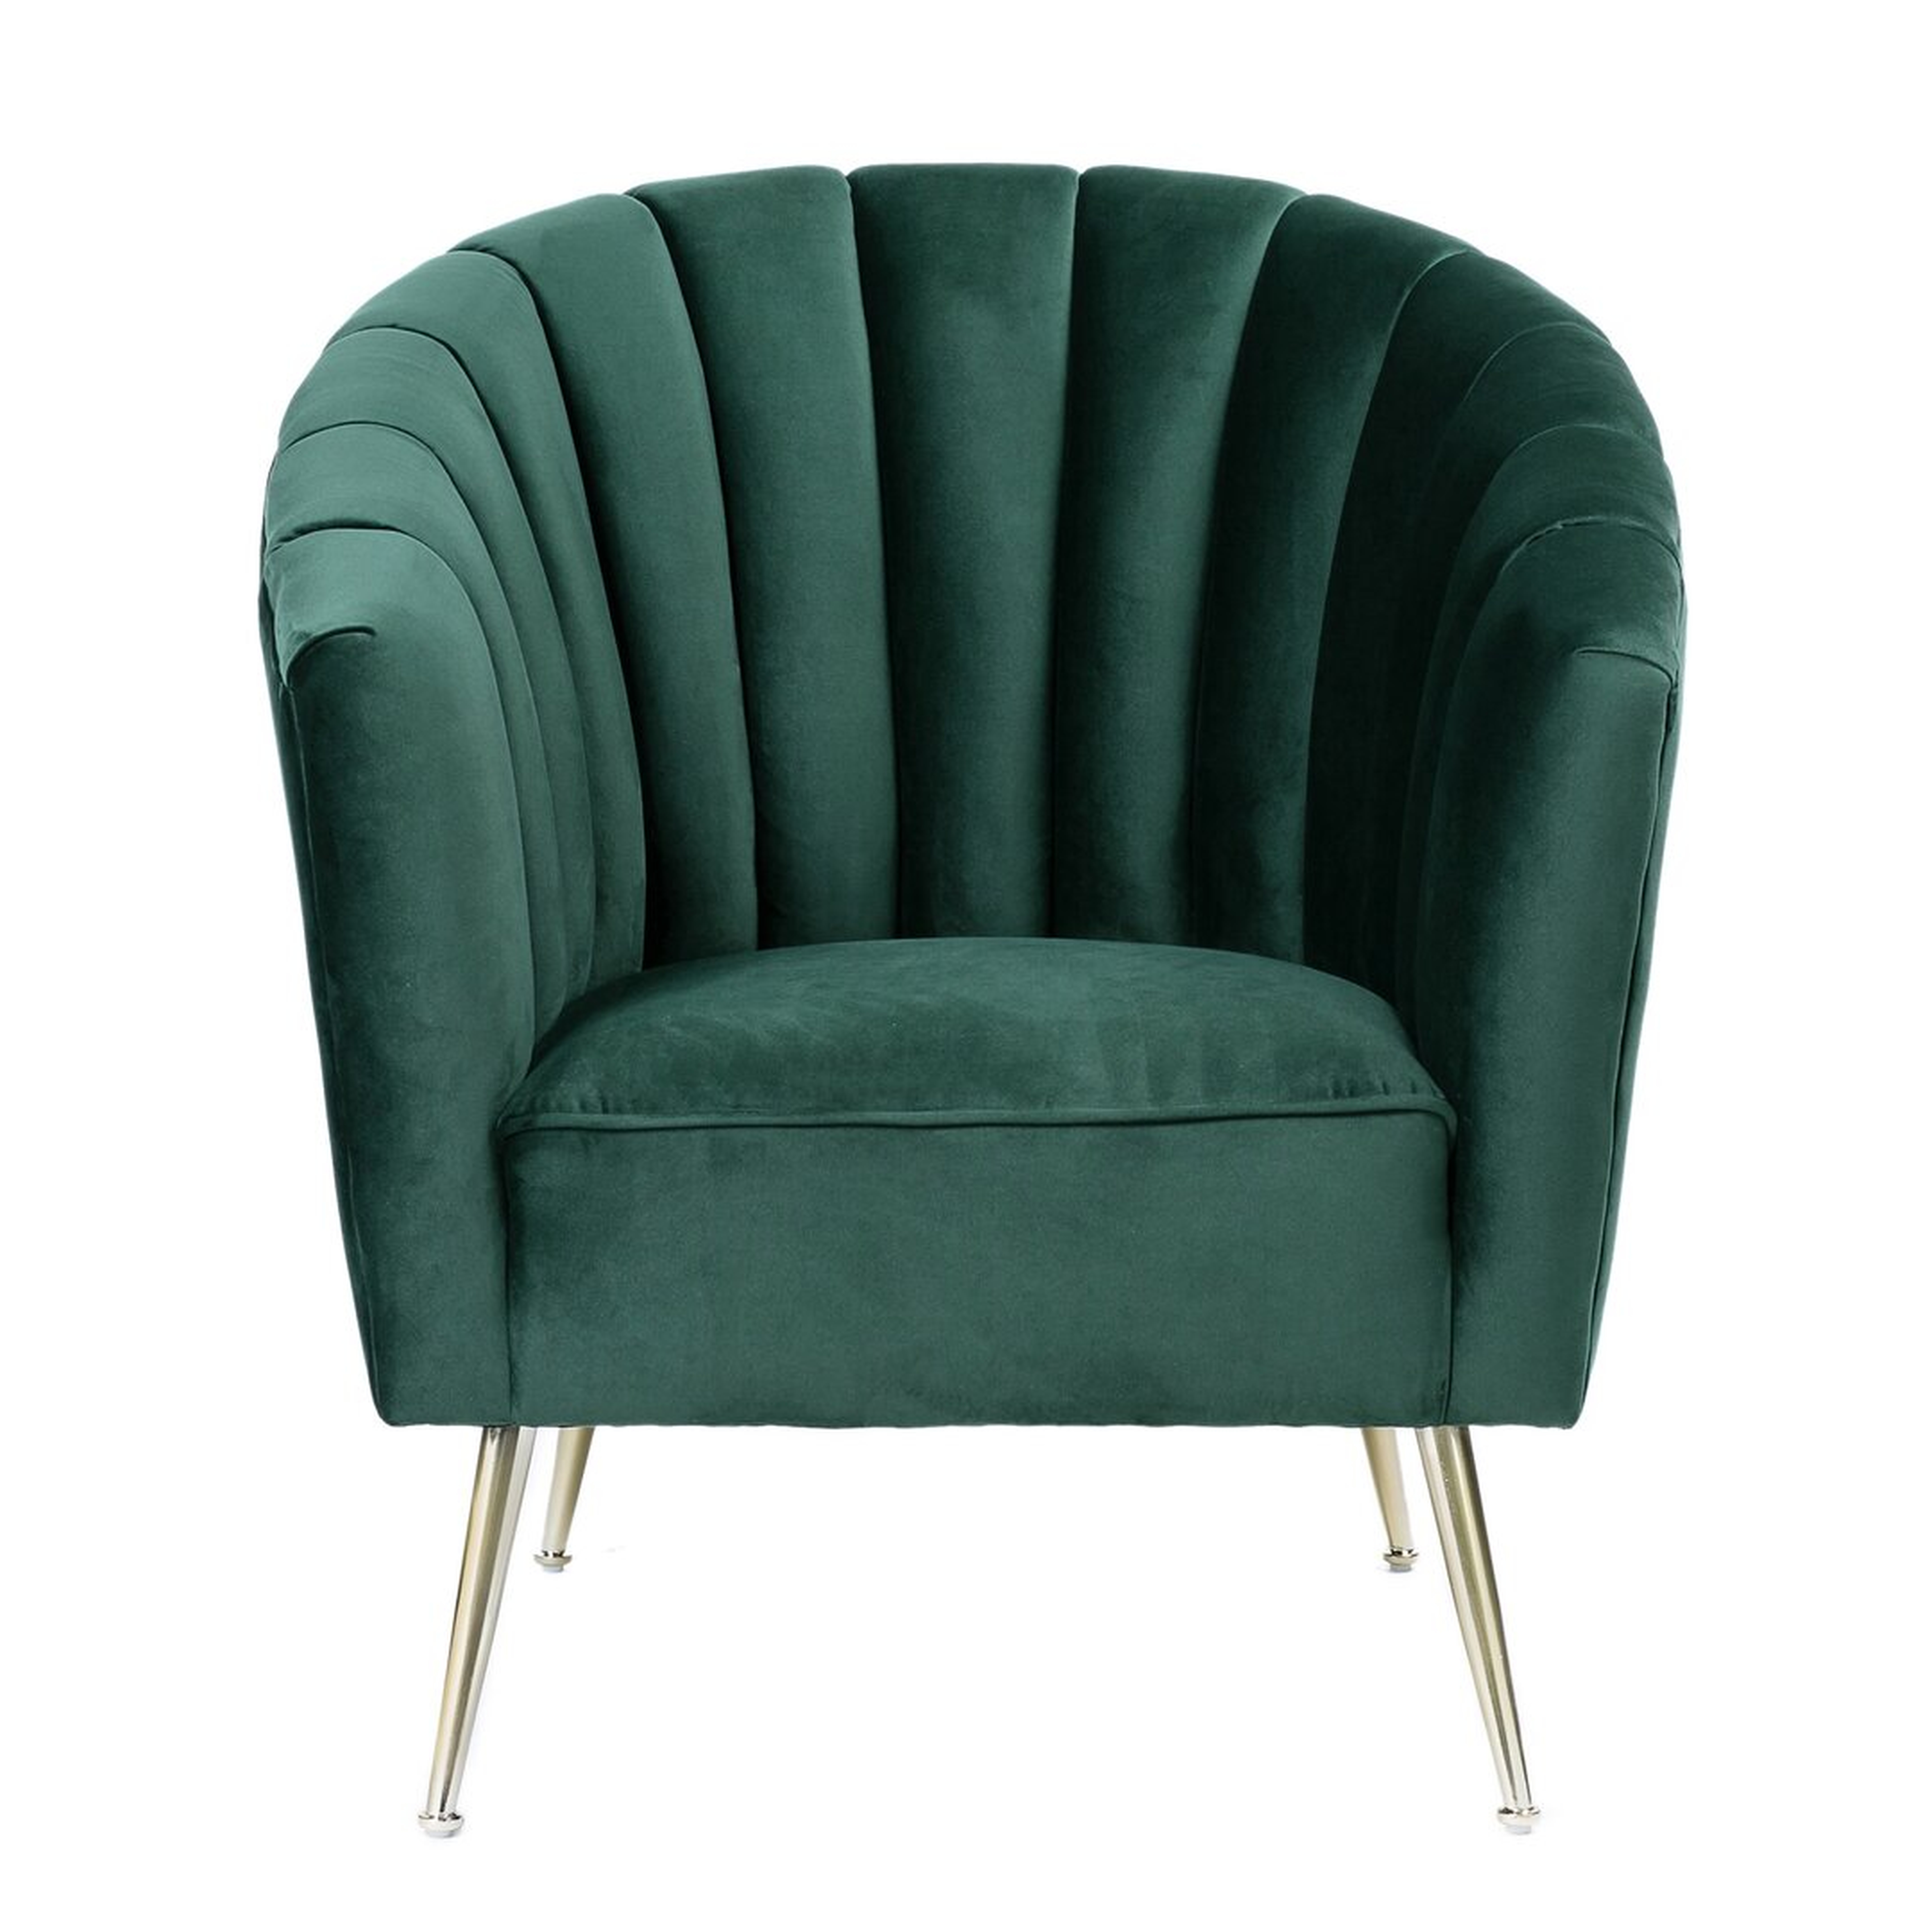 "Manhattan Comfort Rosemont Accent Chair" - Perigold